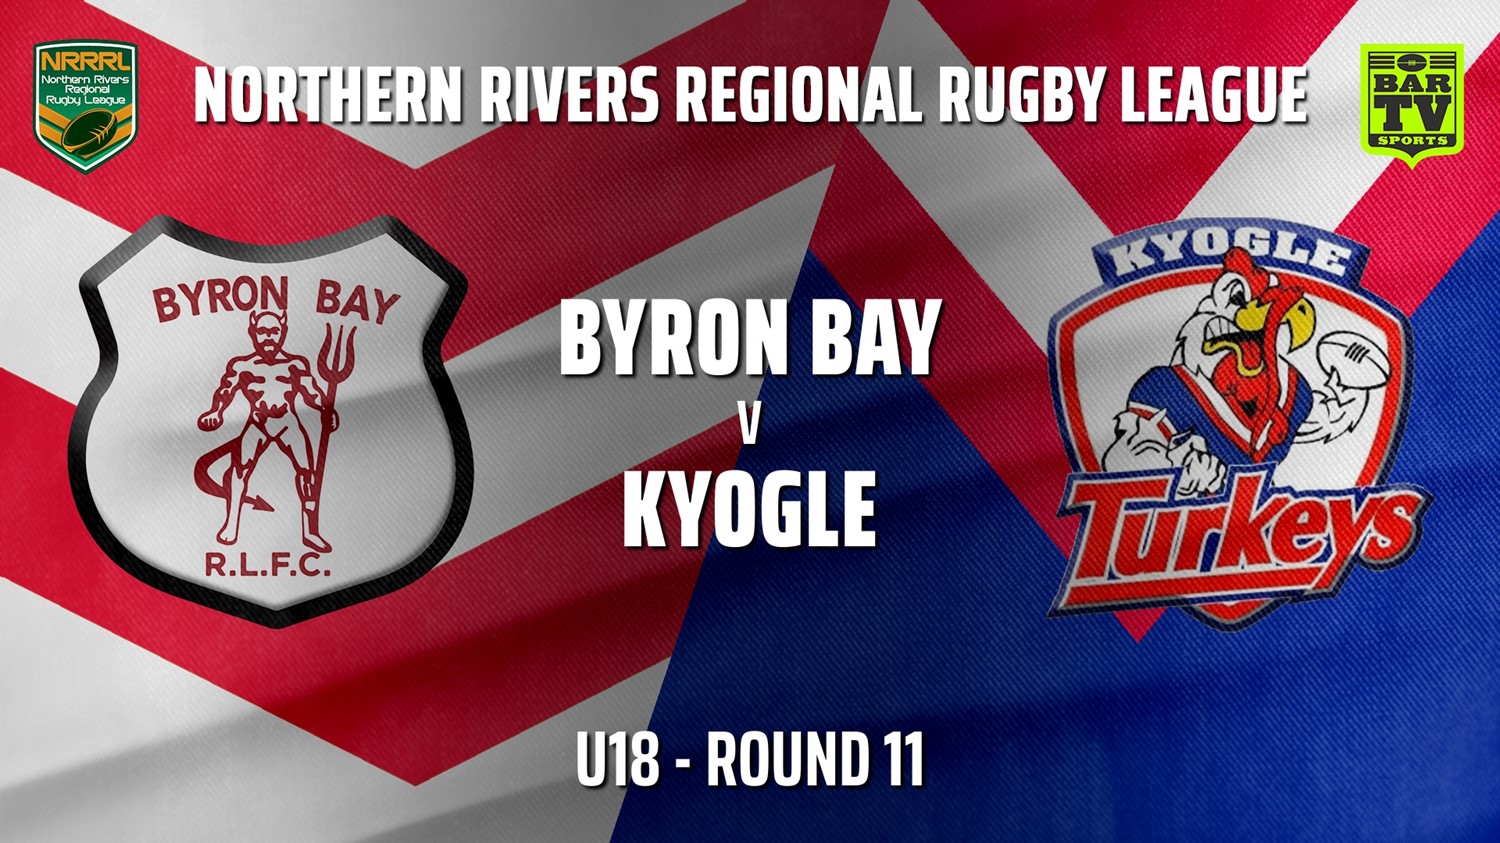 210718-Northern Rivers Round 11 - U18 - Byron Bay Red Devils v Kyogle Turkeys Slate Image